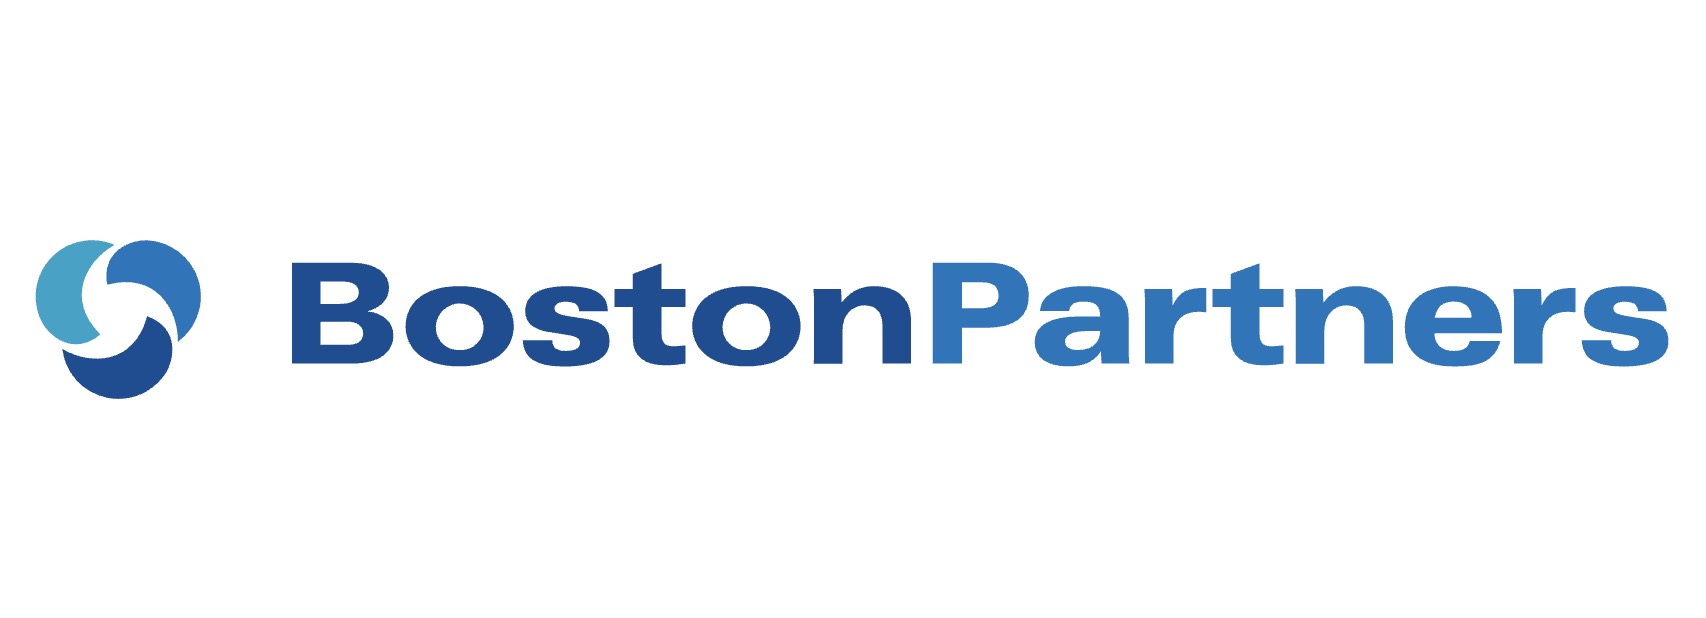 Boston Partners Logo 